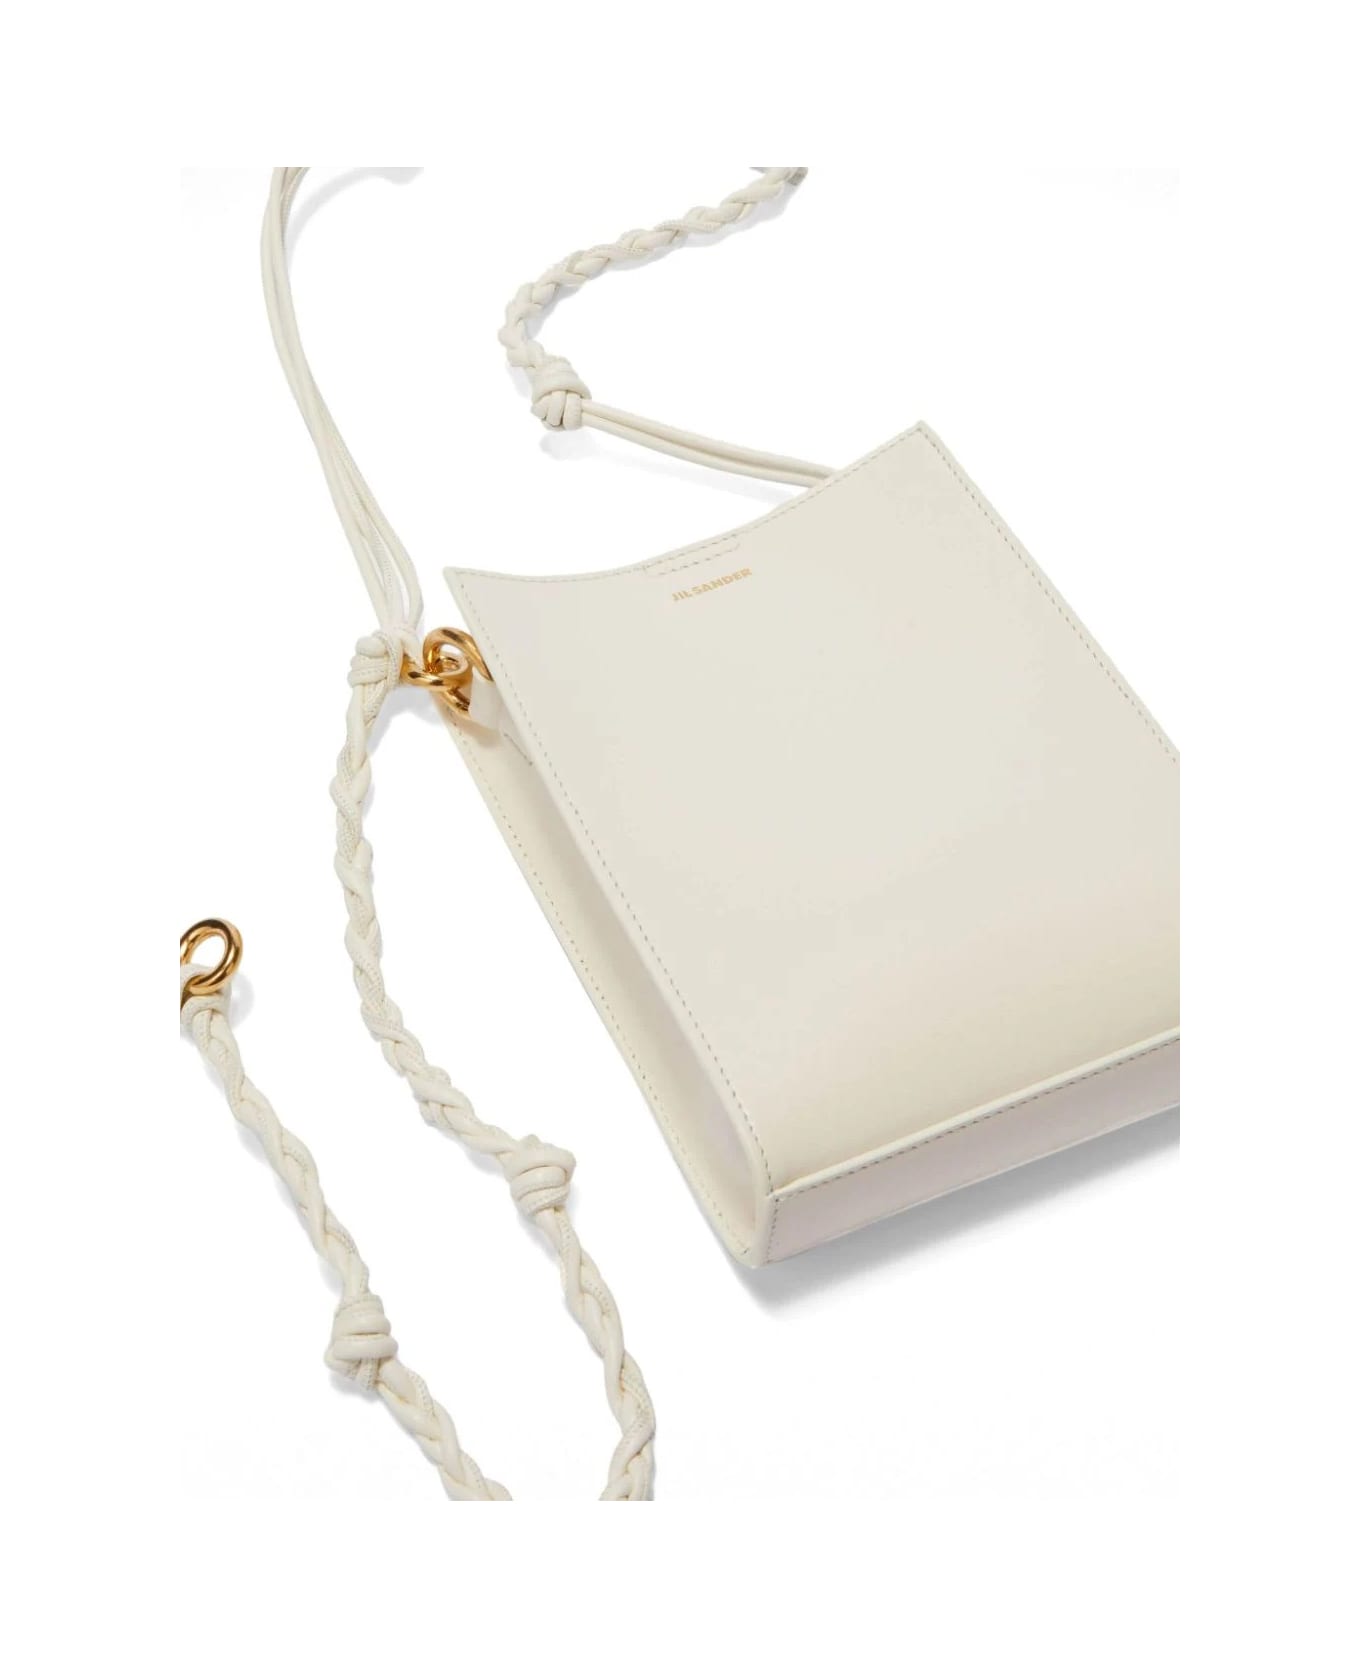 Jil Sander Ivory Tangle Small Shoulder Bag - White